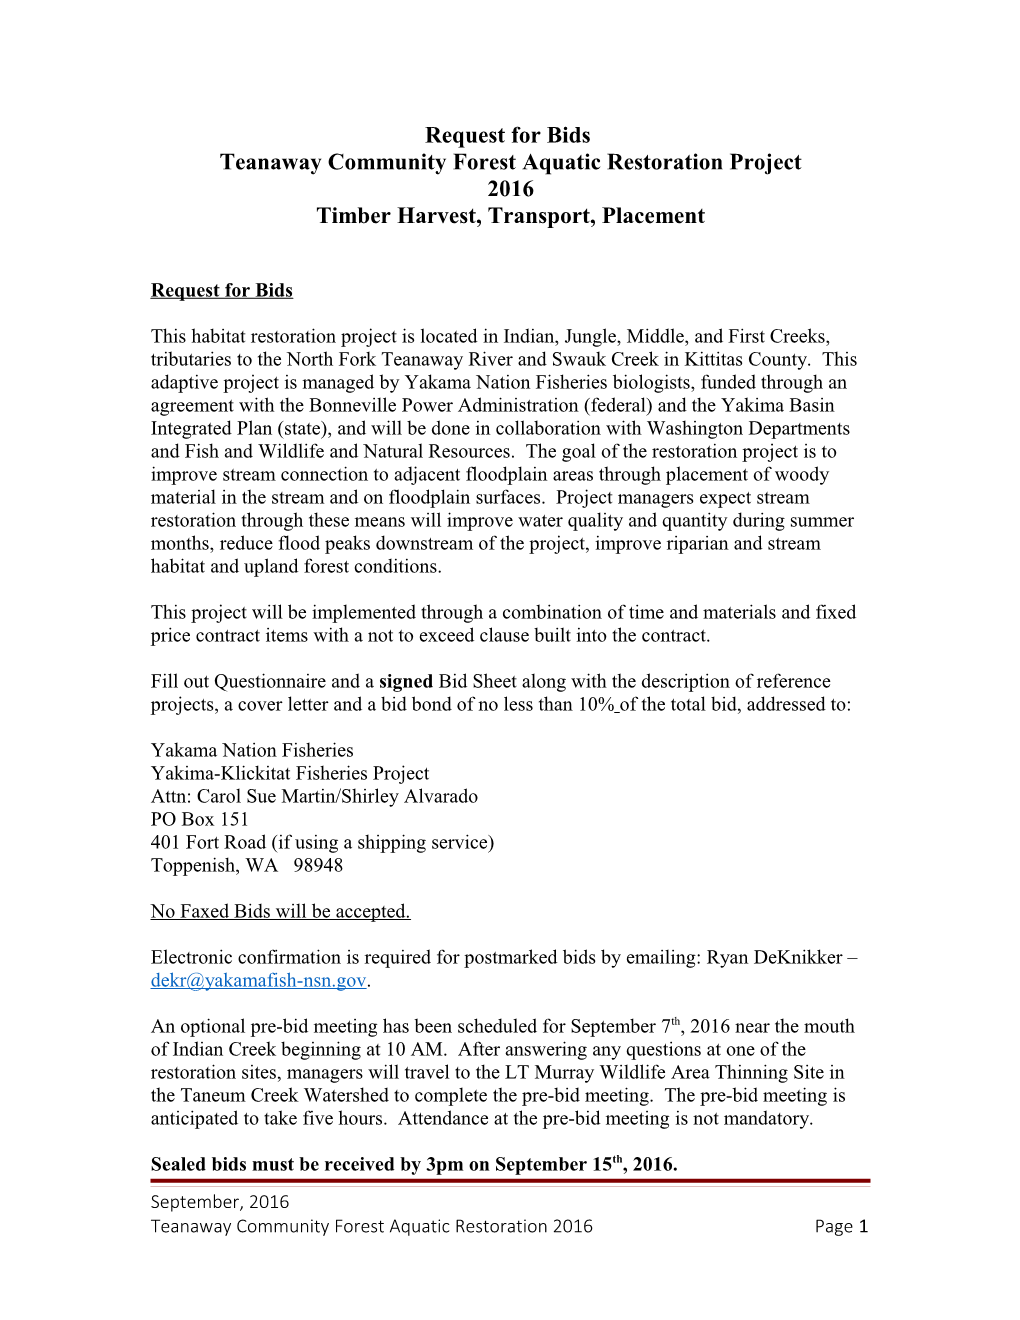 Teanaway Community Forest Aquatic Restoration Project